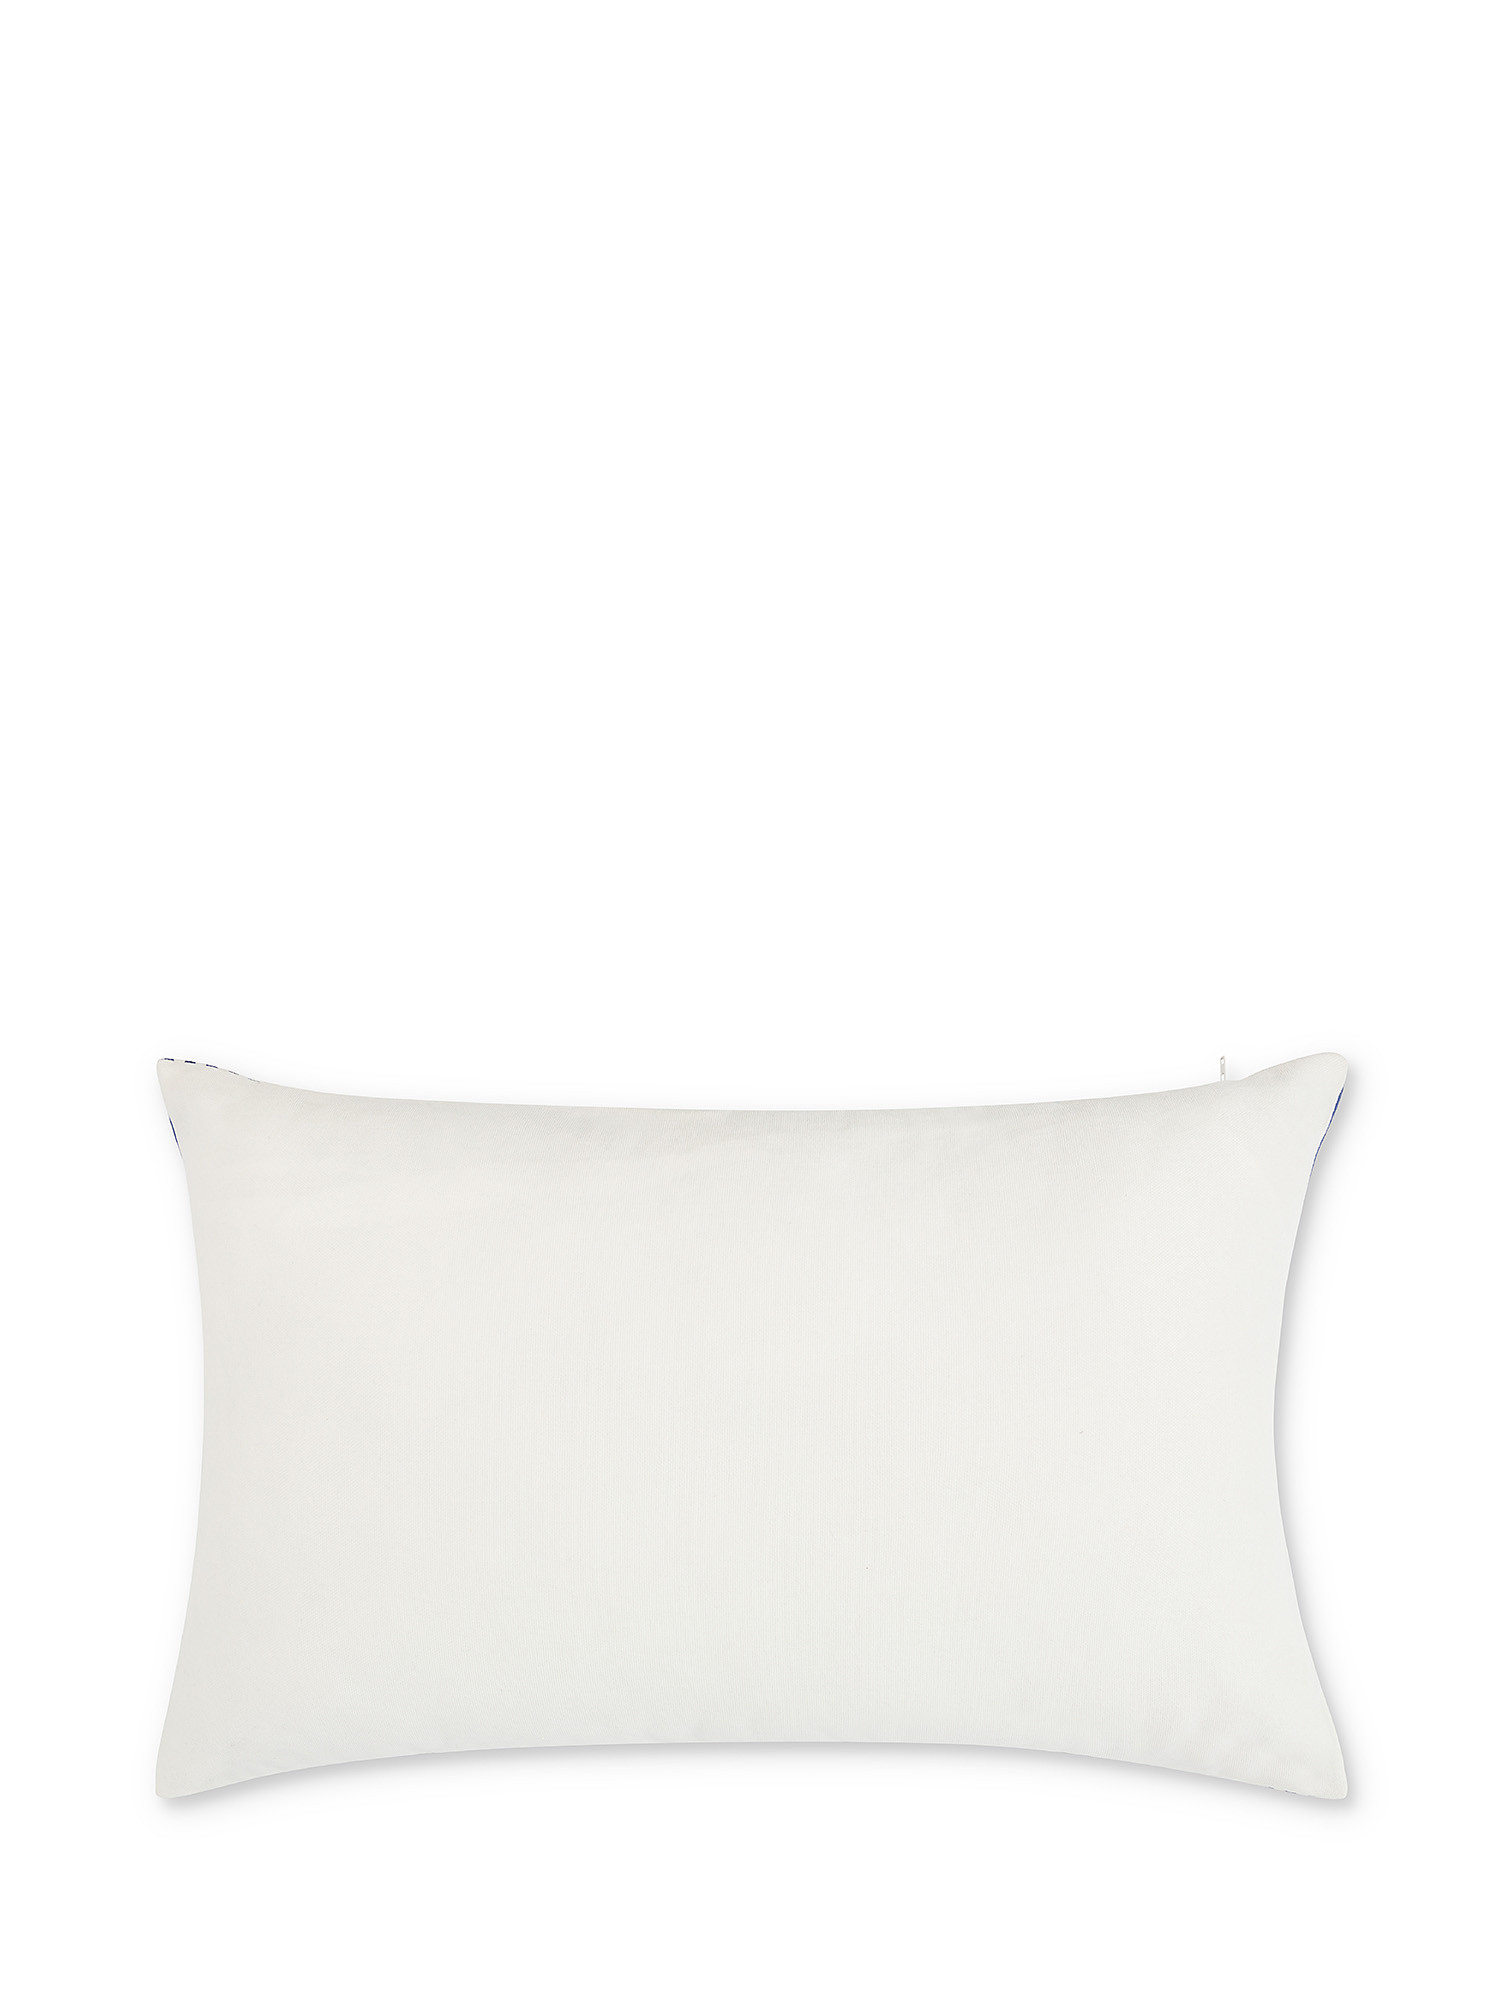 Multi-lined fabric cushion 35x55cm, Blue, large image number 1